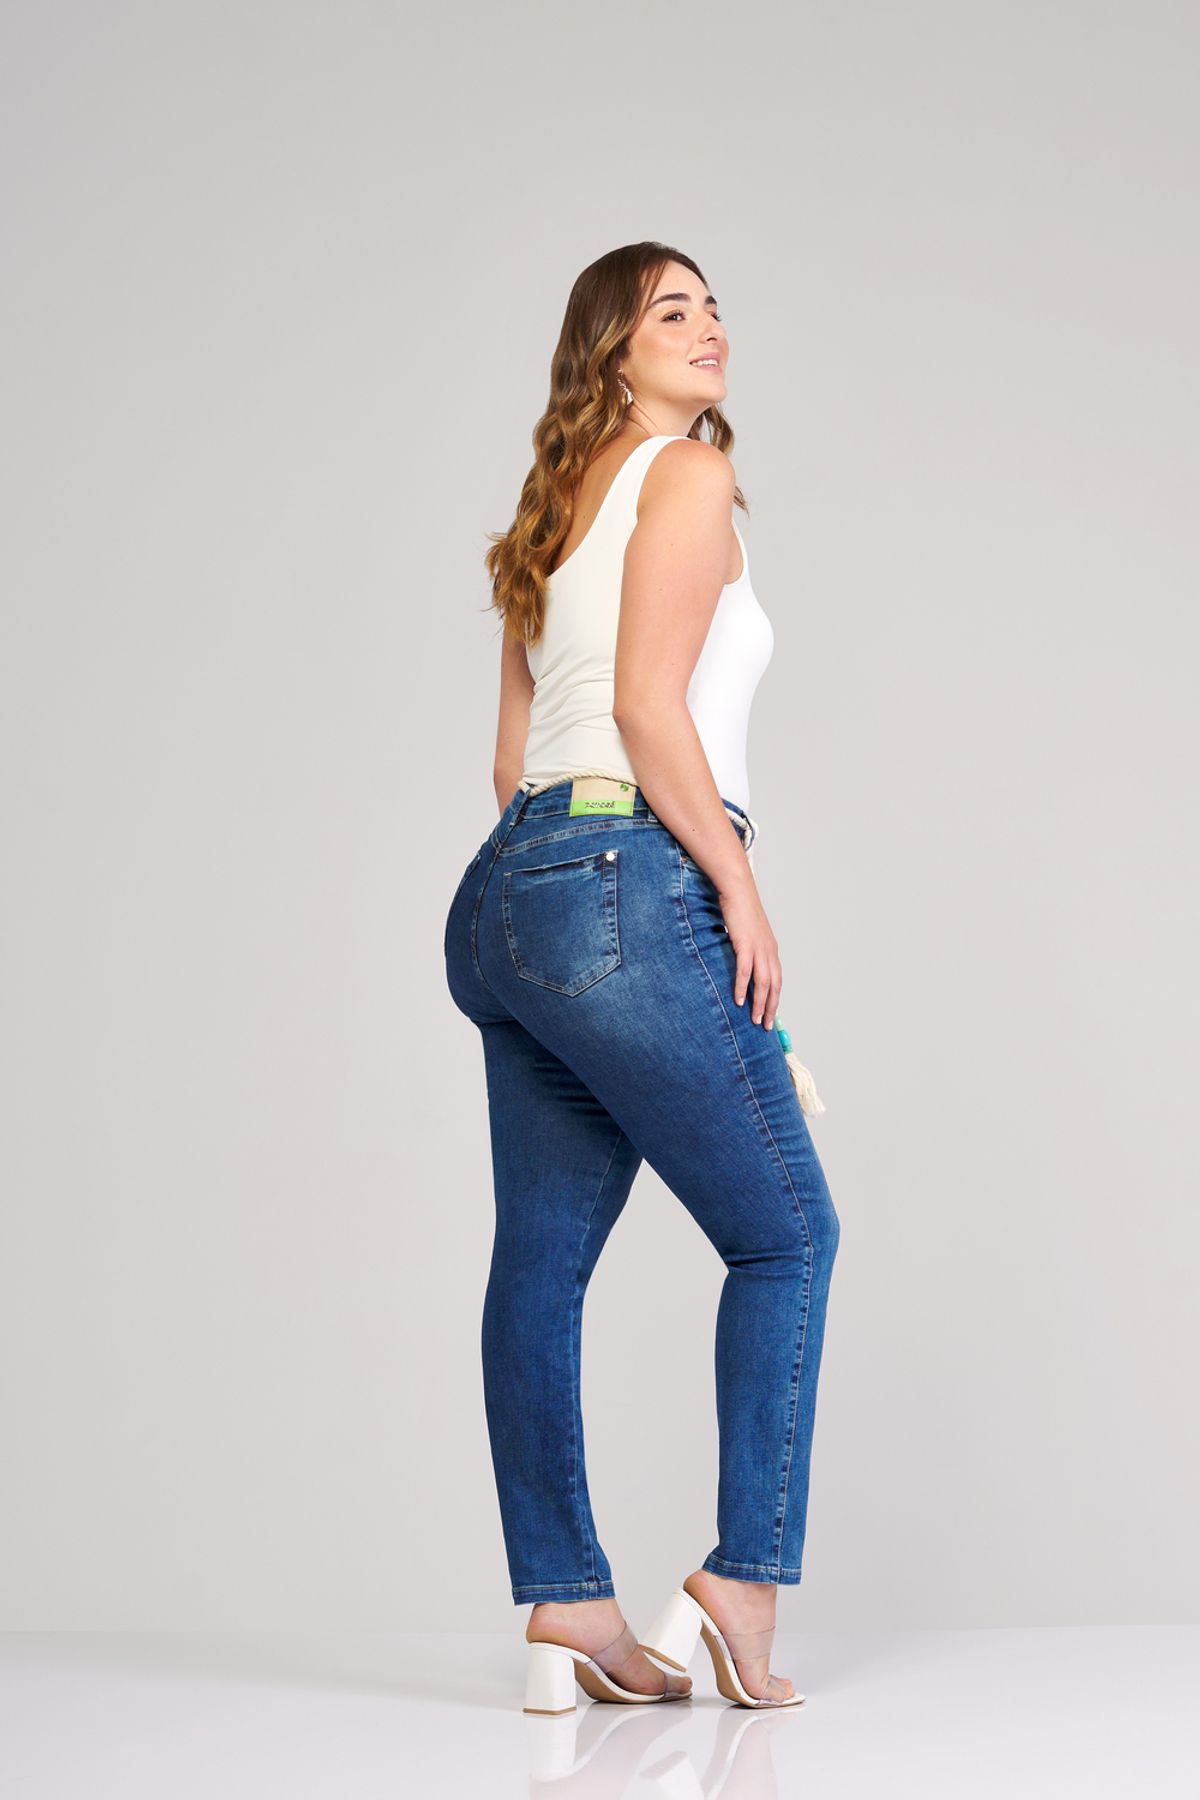 Macacão Patogê feminino curvy jeans MC37129 - patoge